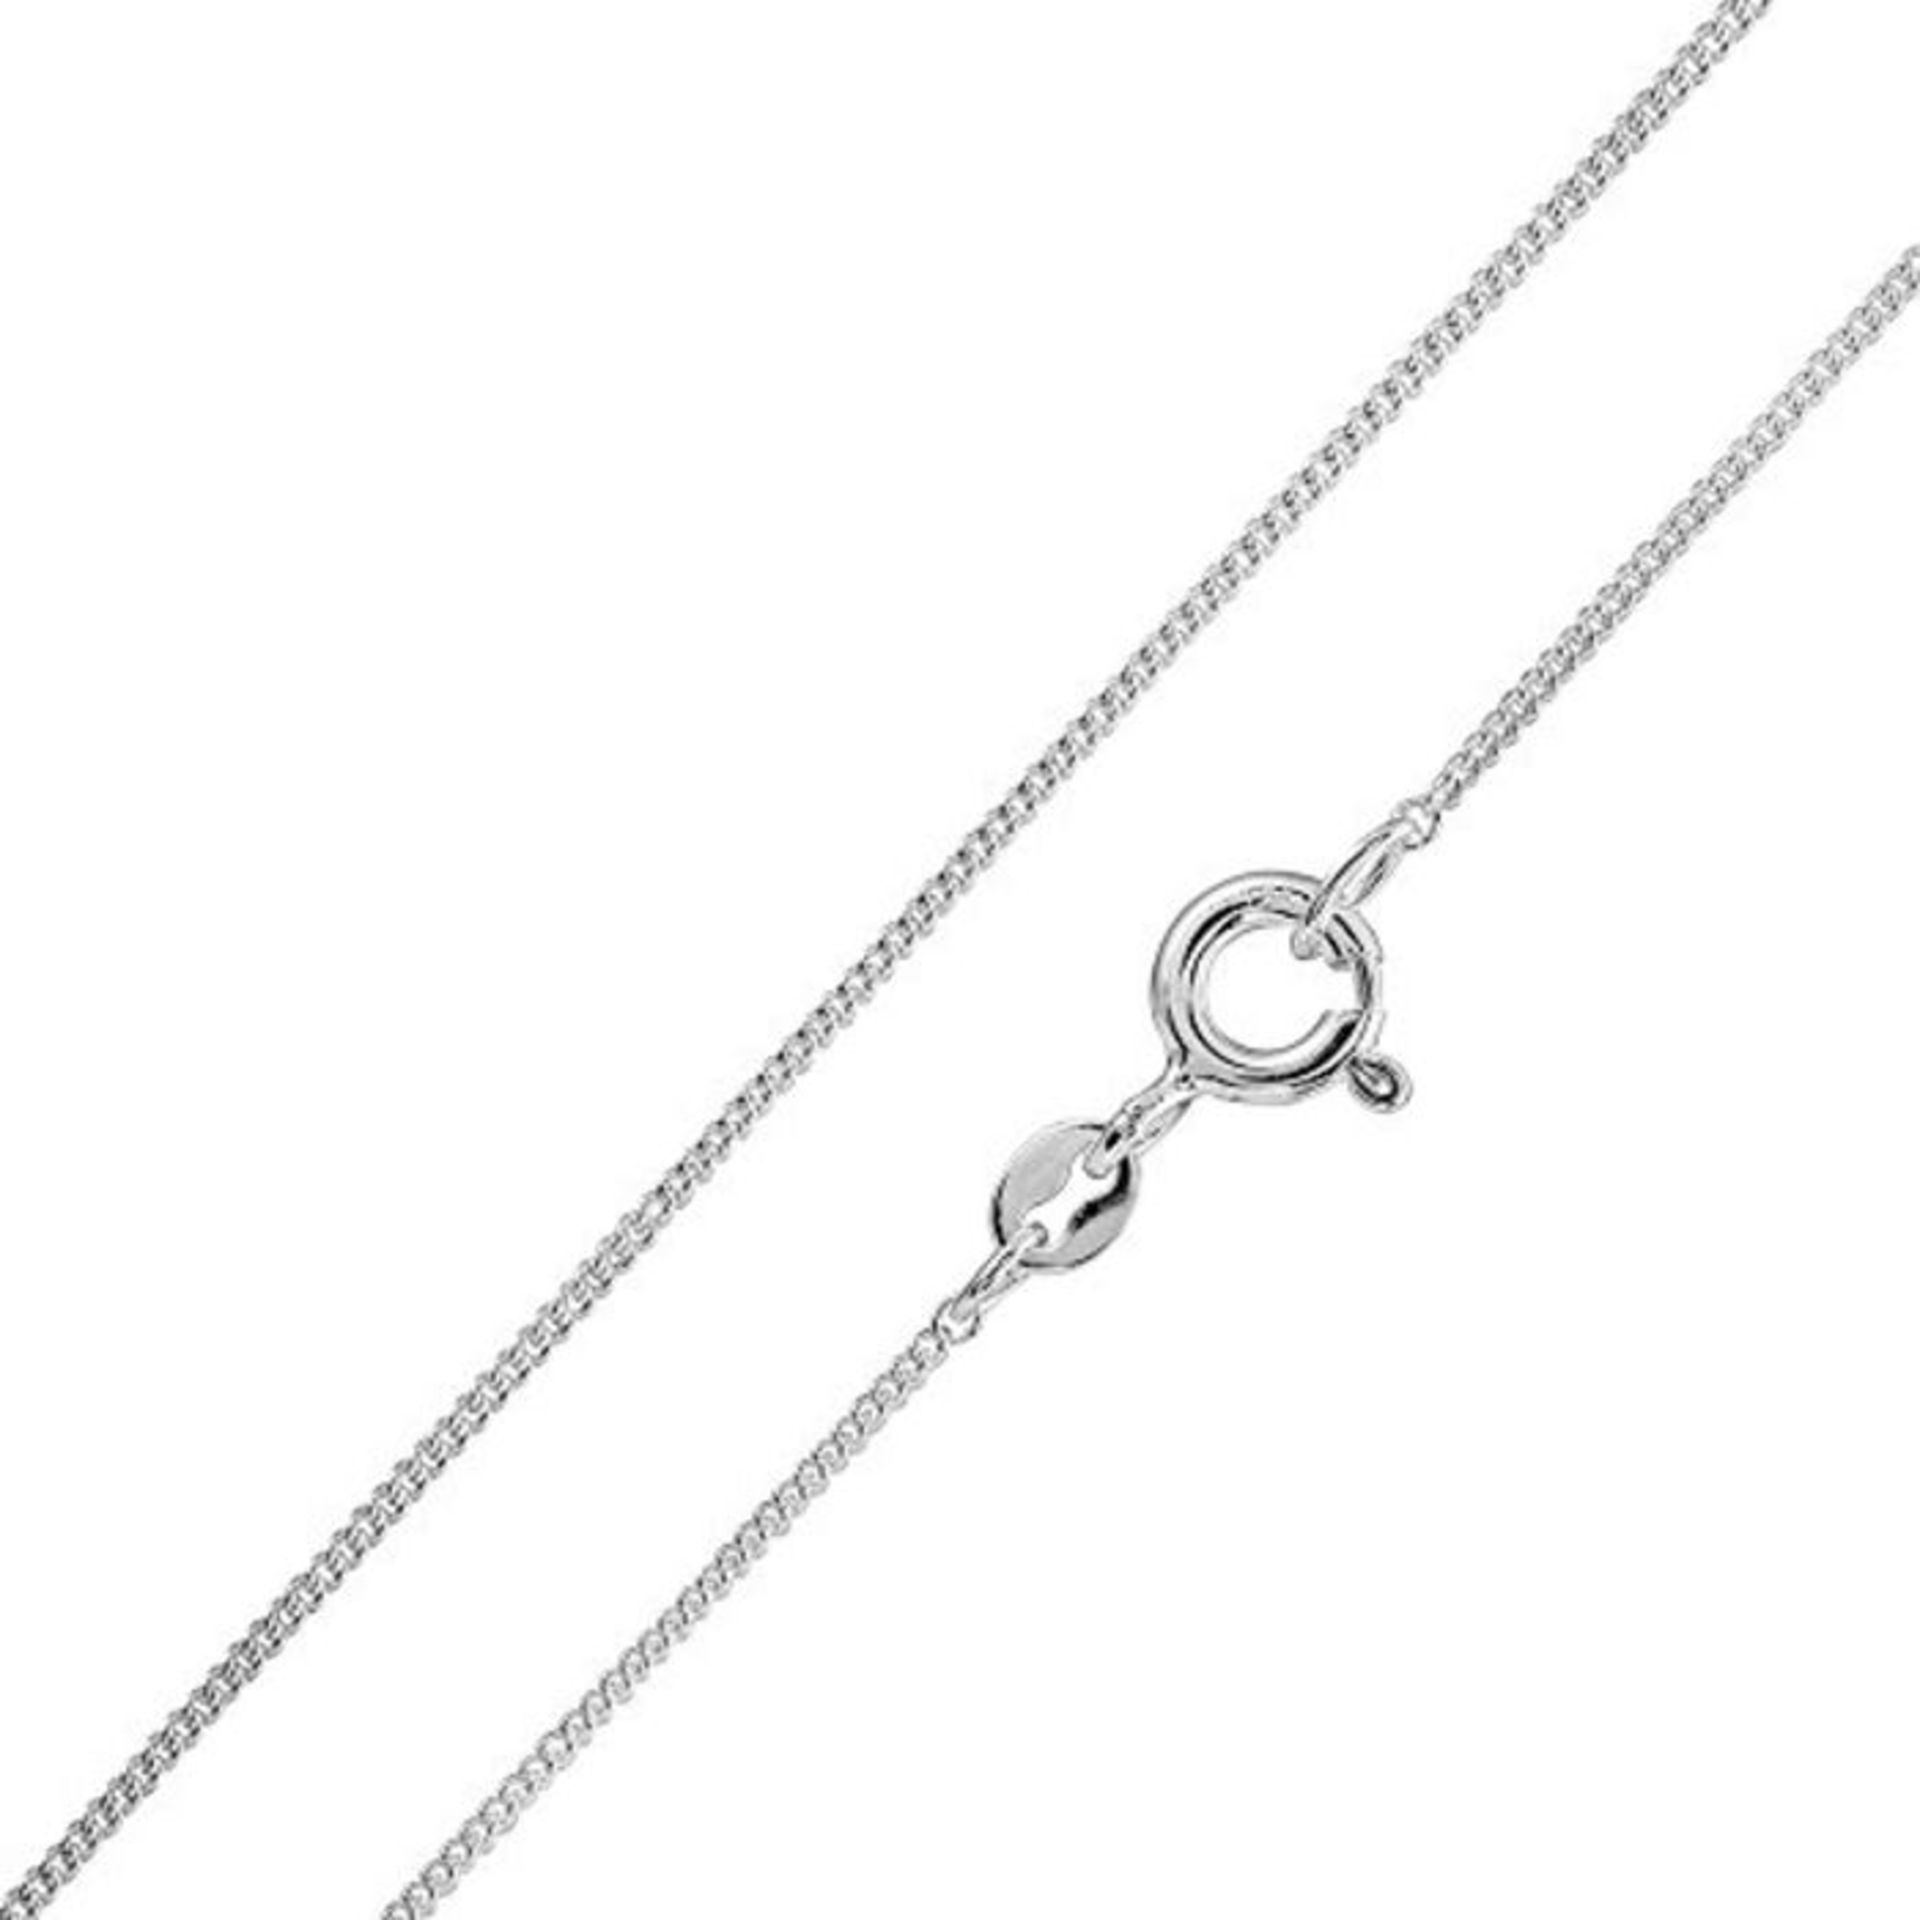 Materia #K32 Jewellery Fine 925 Silver Chain Curb 1 mm - Women?s Necklace Silver in 40